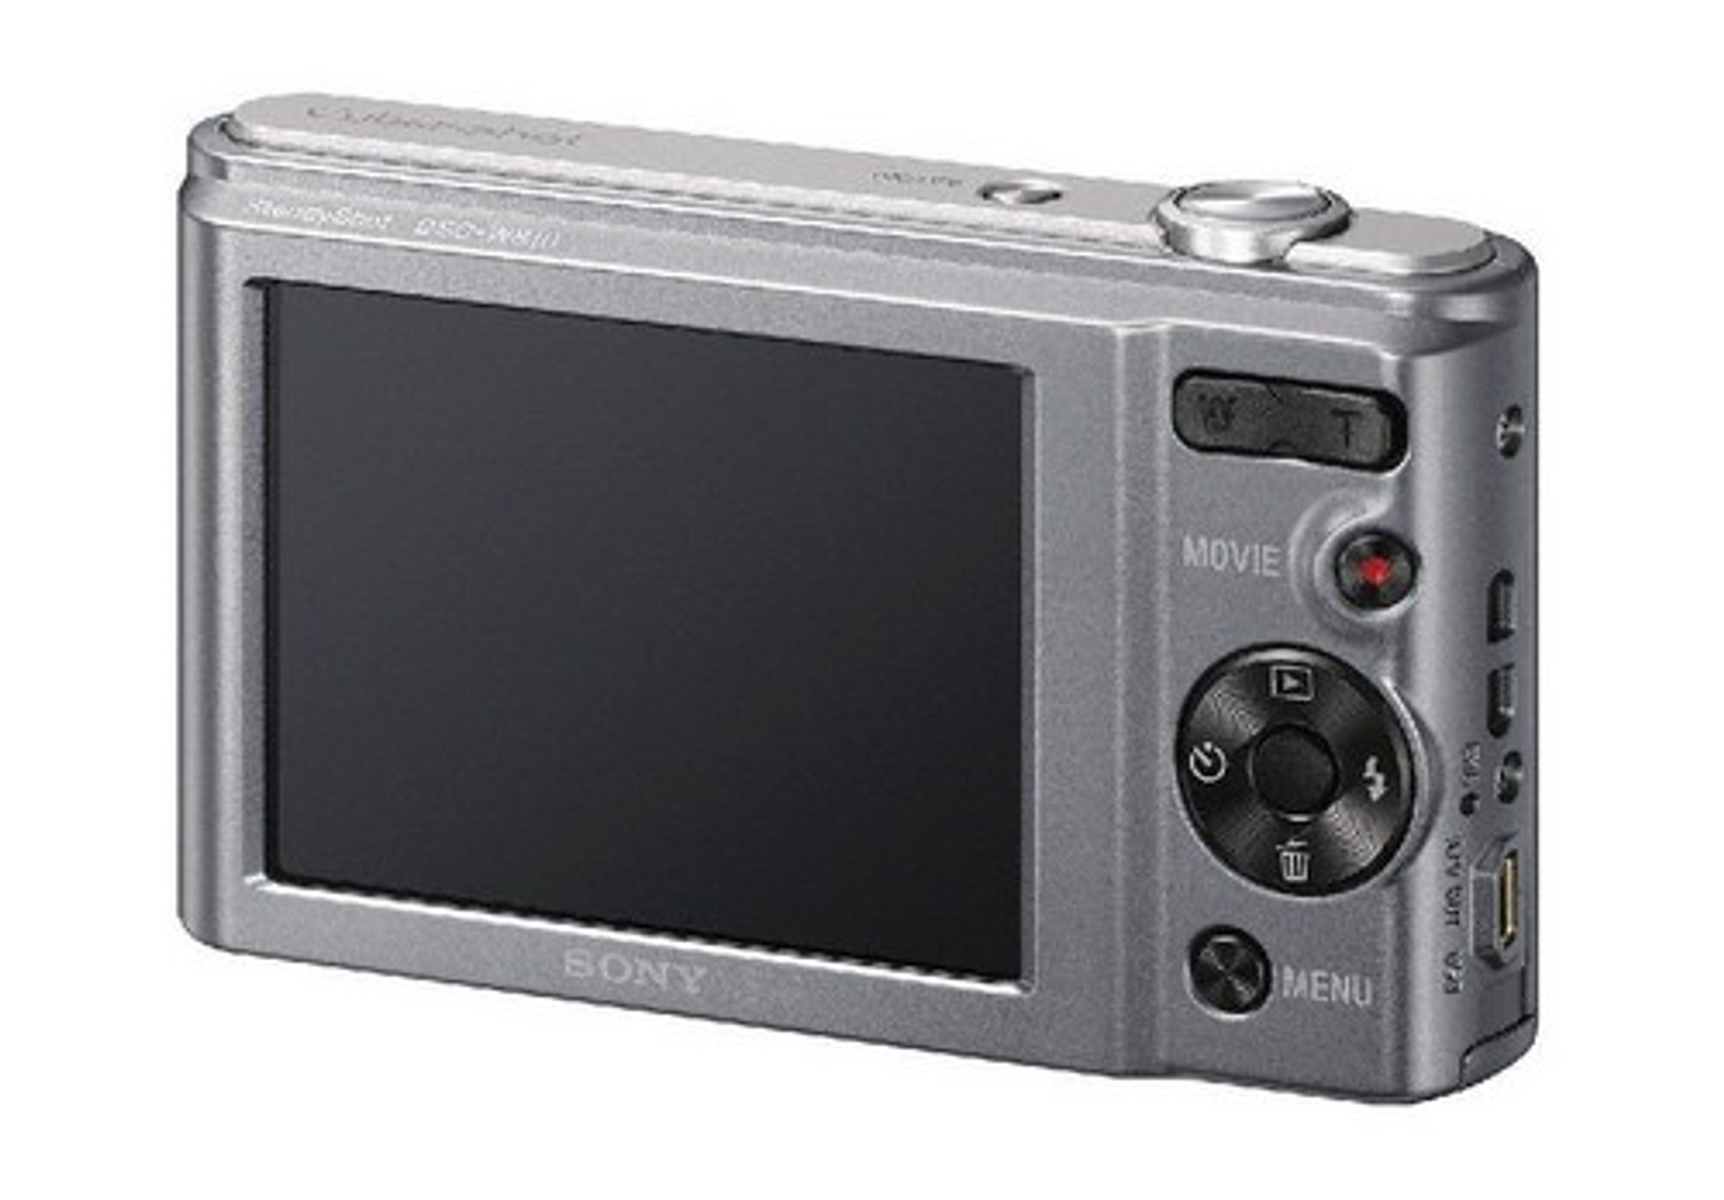 6x opt. 810 Digitalkamera Silber, SILBER DSC-W TFT-LCD SONY Zoom,